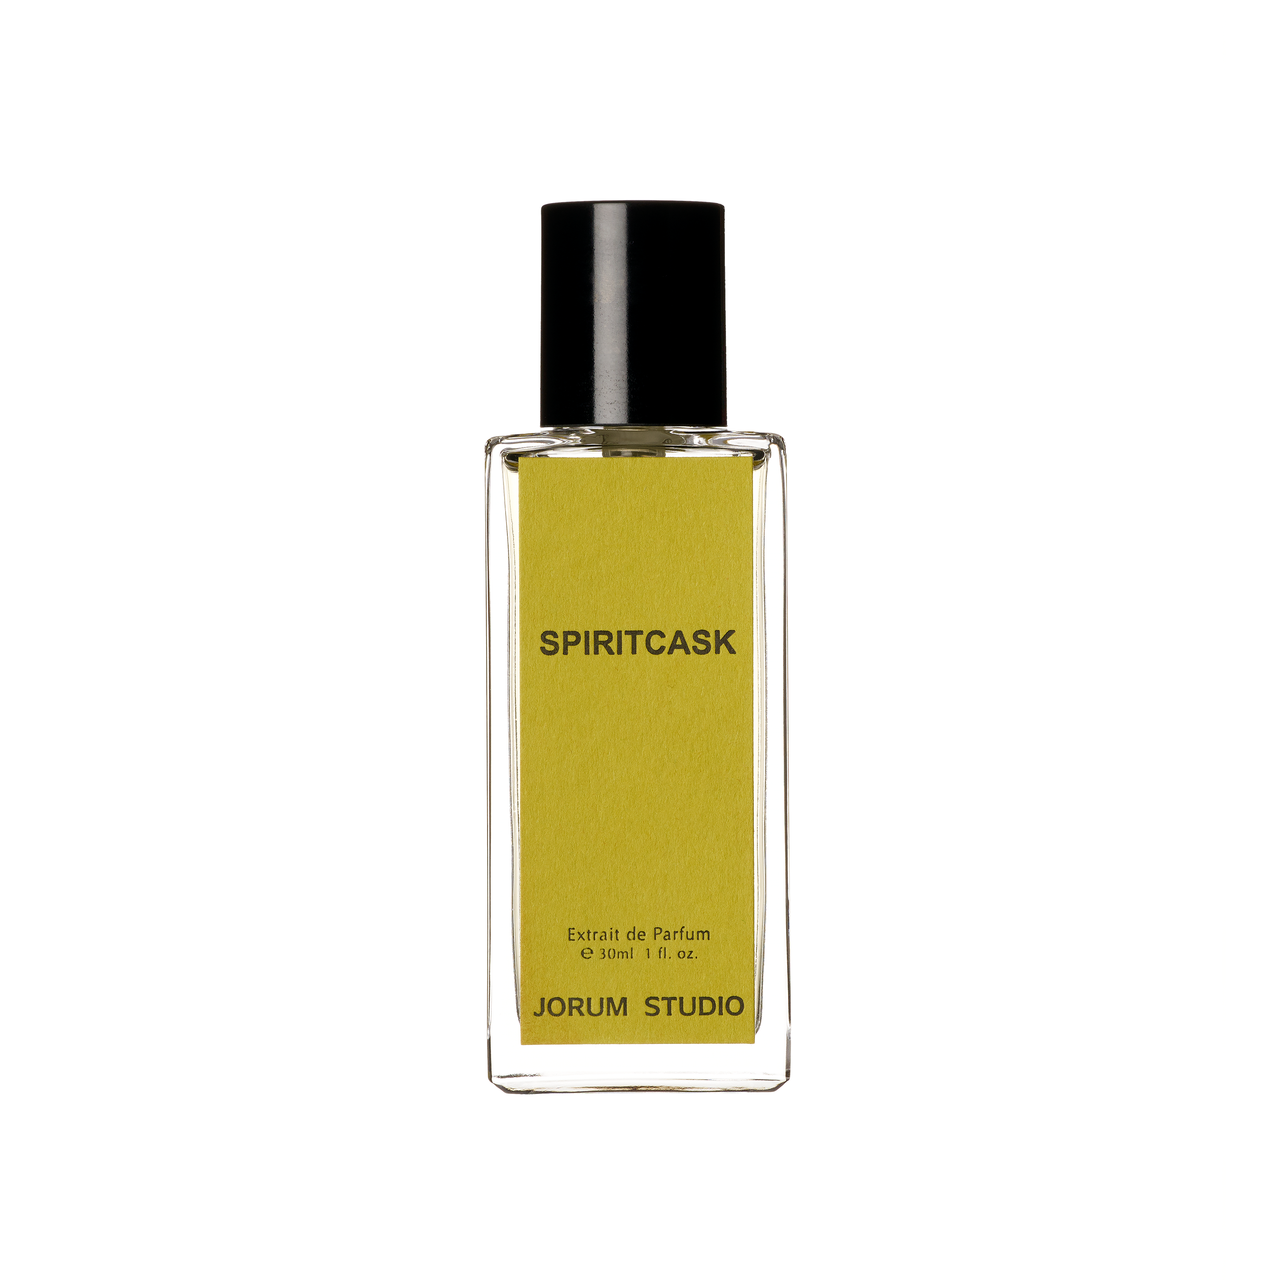 30ml bottle of Spiritcask Extrait de Parfum by independent Scottish perfumers Jorum Studio, with a chartreuse label